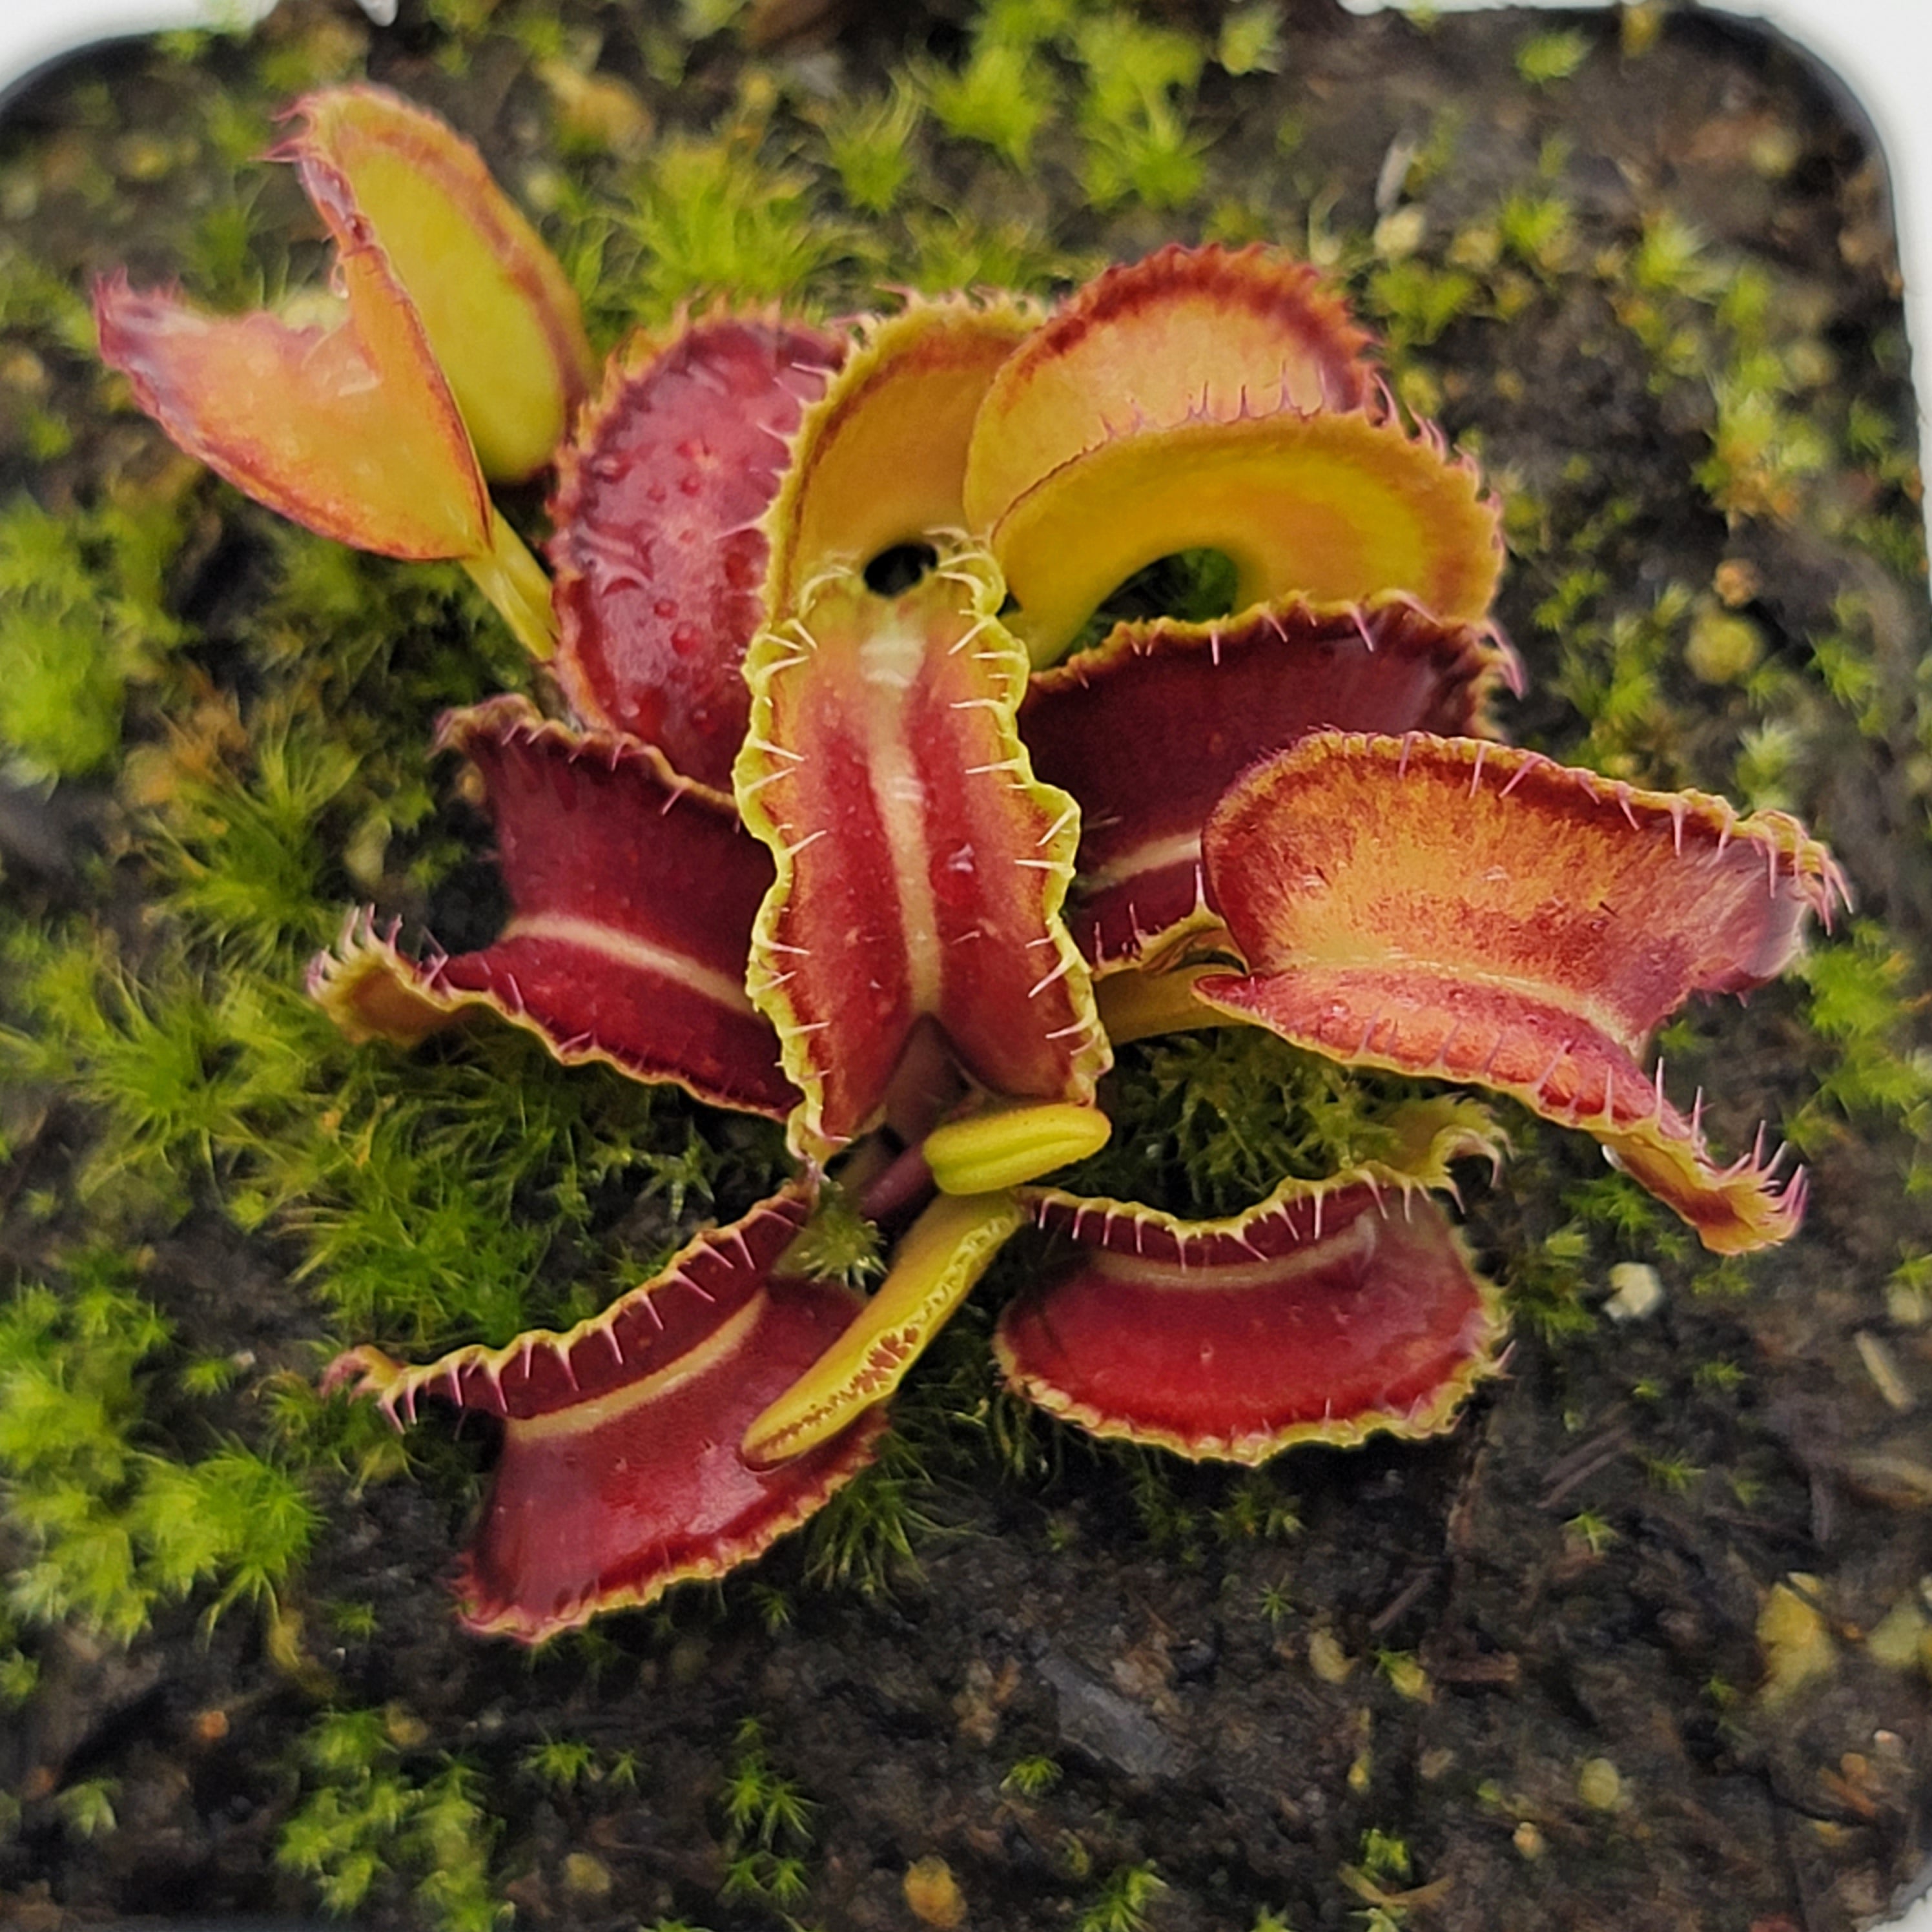 Venus flytrap (Dionaea muscipula) "Kim Jong-il" - Rainbow Carnivorous Plants LLC